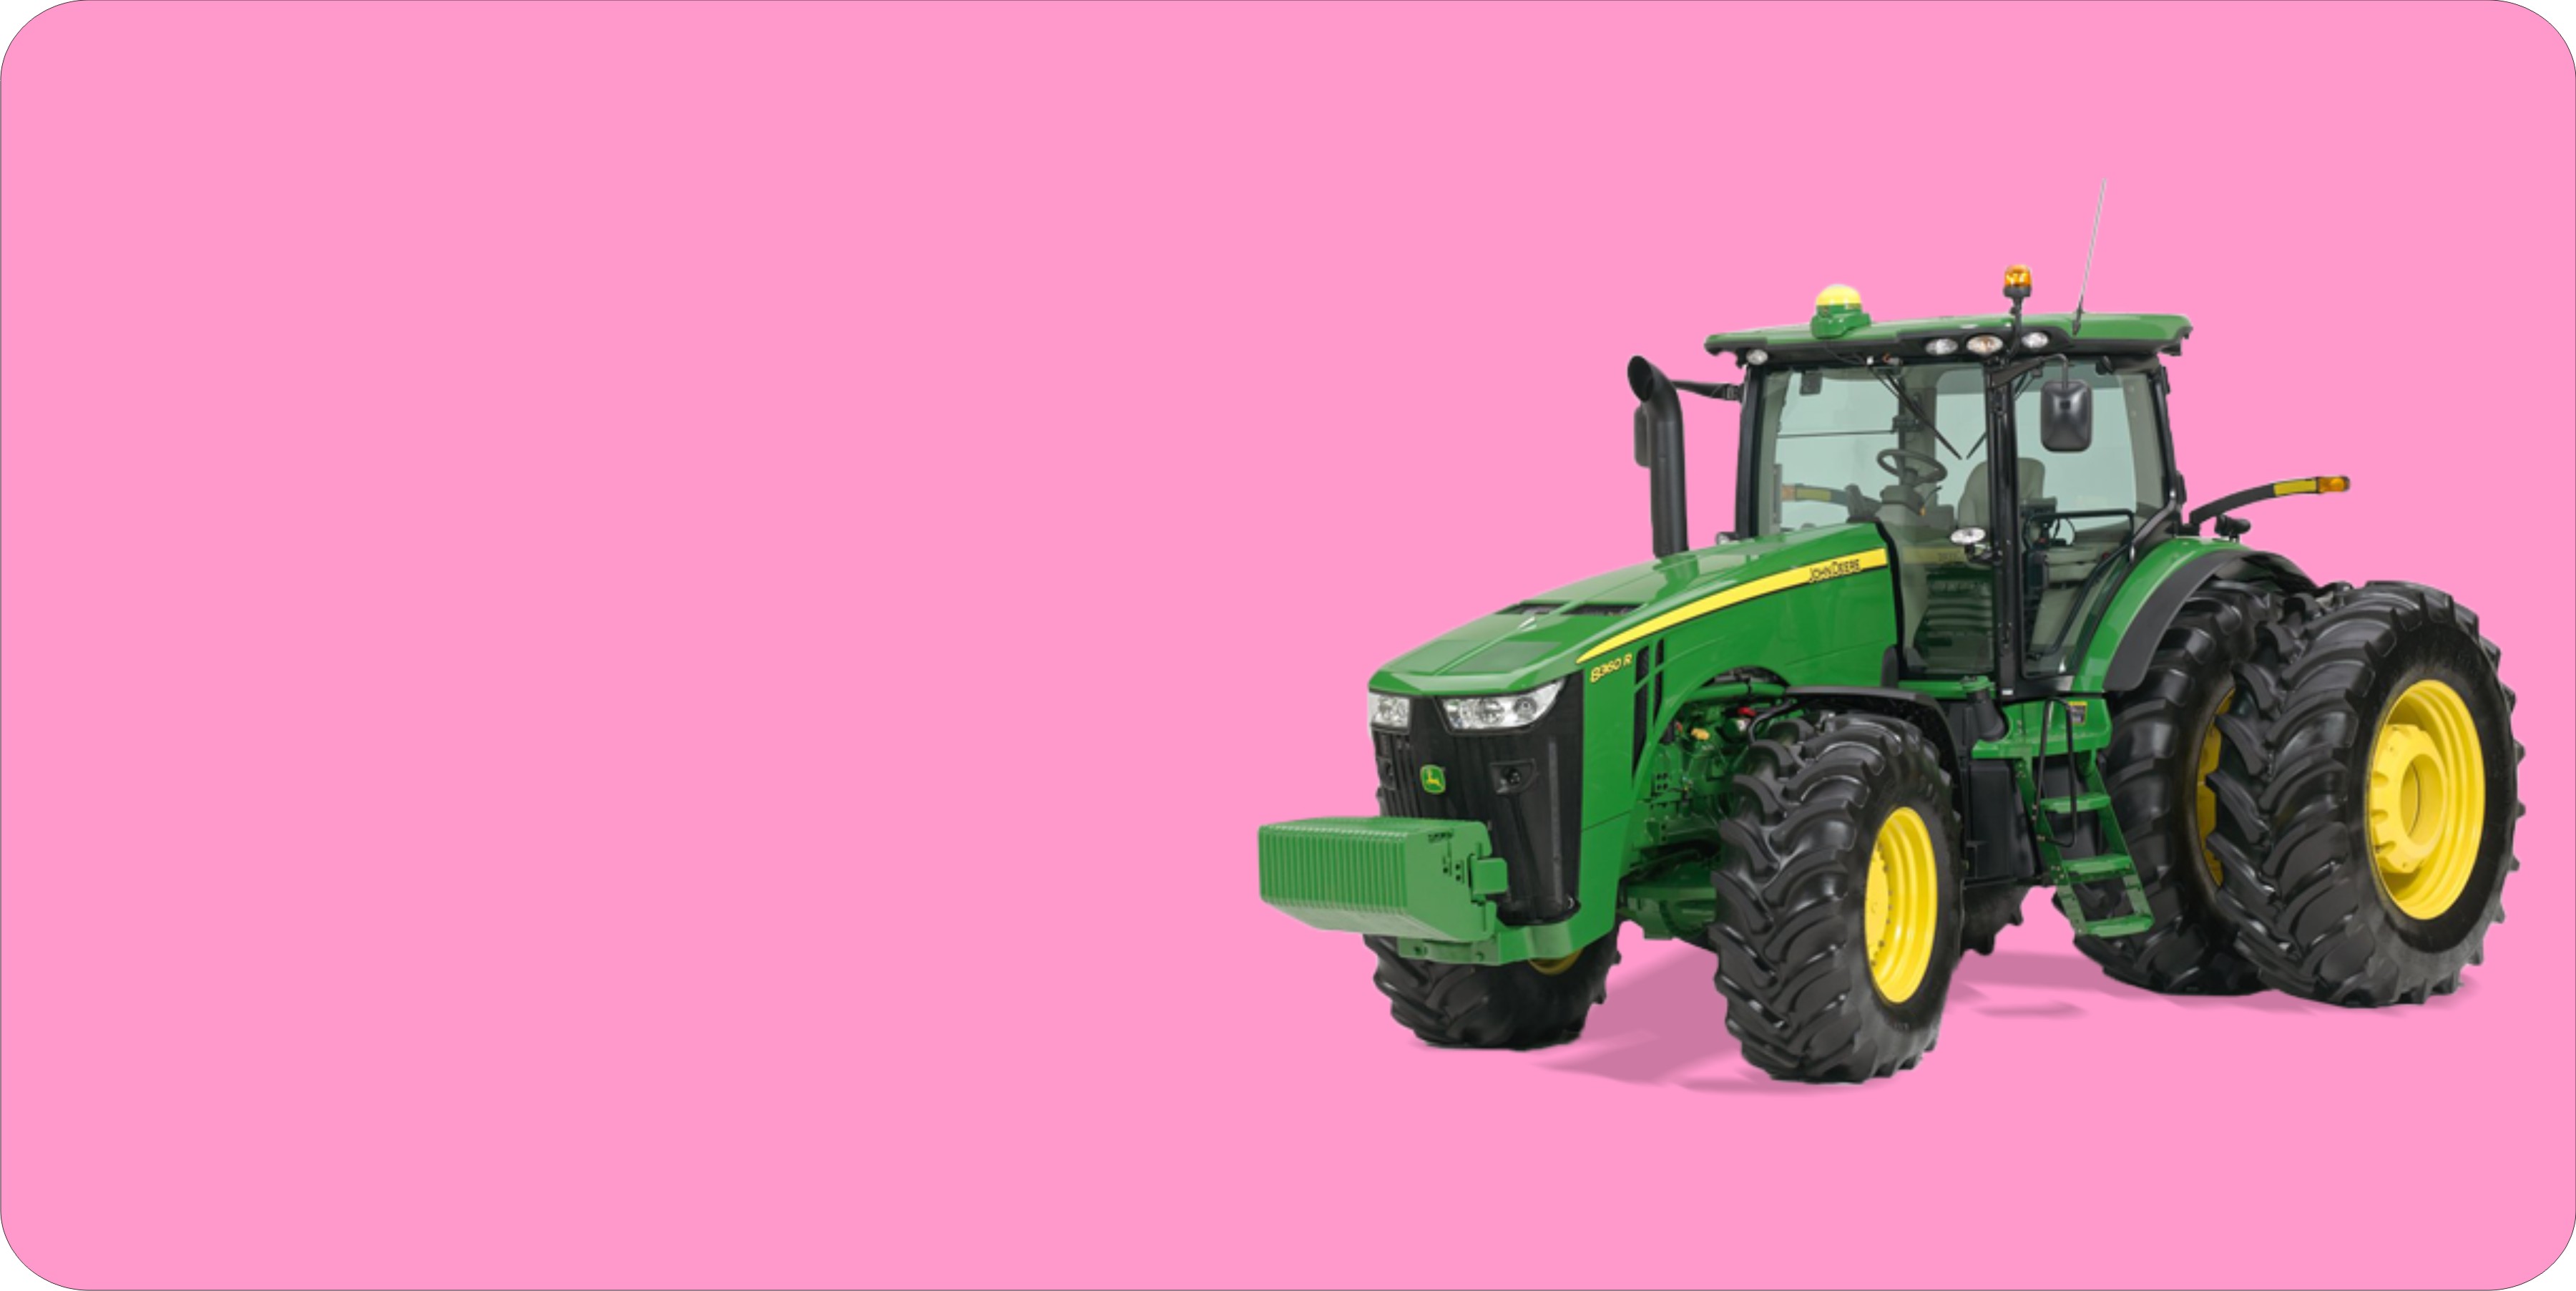 JOHN DEERE Tractor Offset On Pink Plate